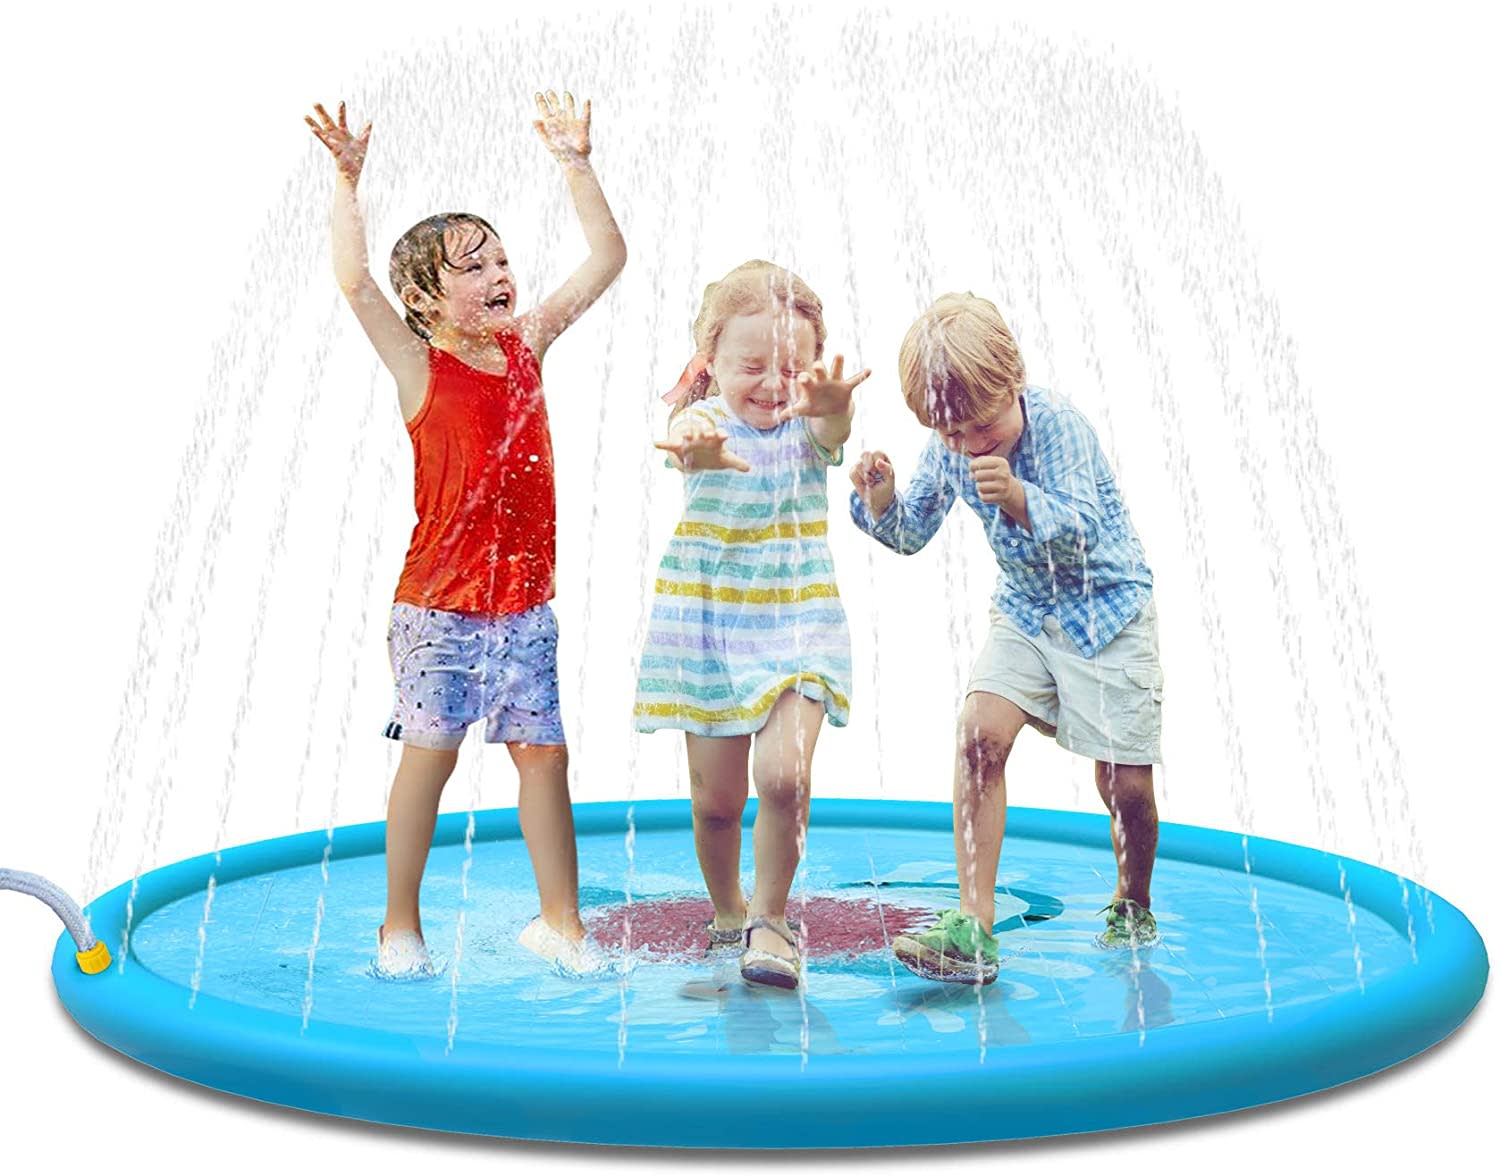 VIPAMZ Splash Patrol Water Sprinkler for Kids,Attach Garden Hose for Backyard Fun,Great Summer Toys for Outdoor 